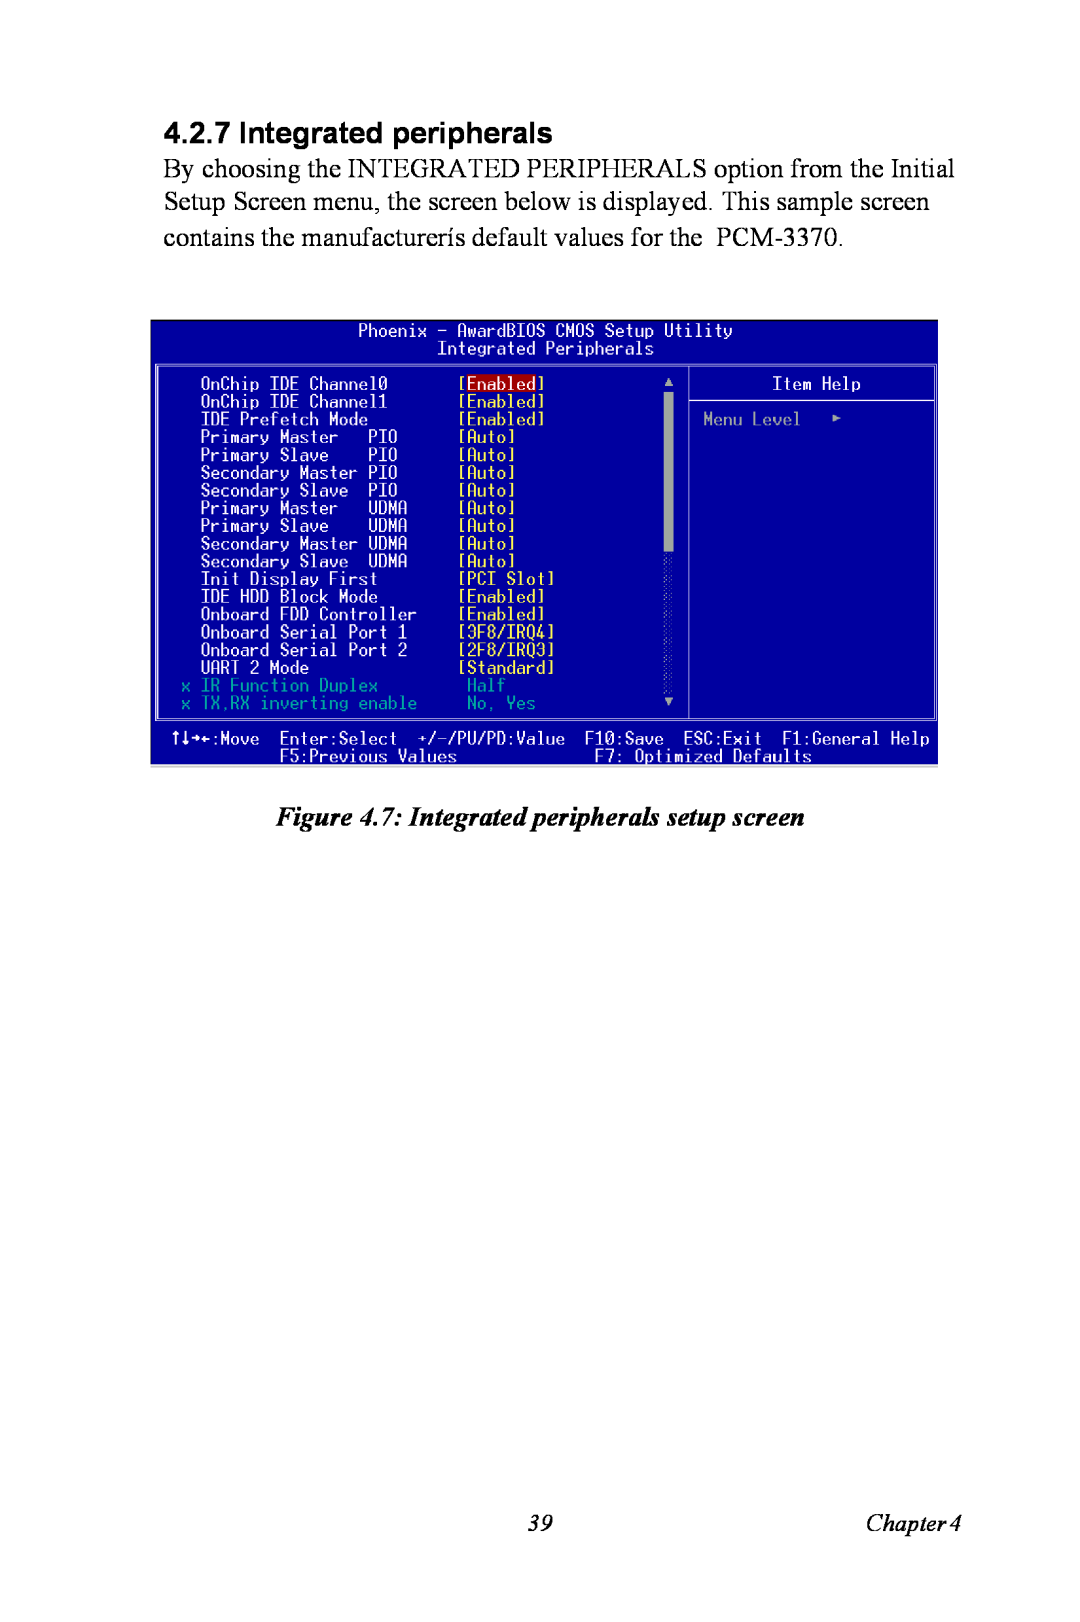 Intel PCM-3370 user manual 7 Integrated peripherals setup screen 